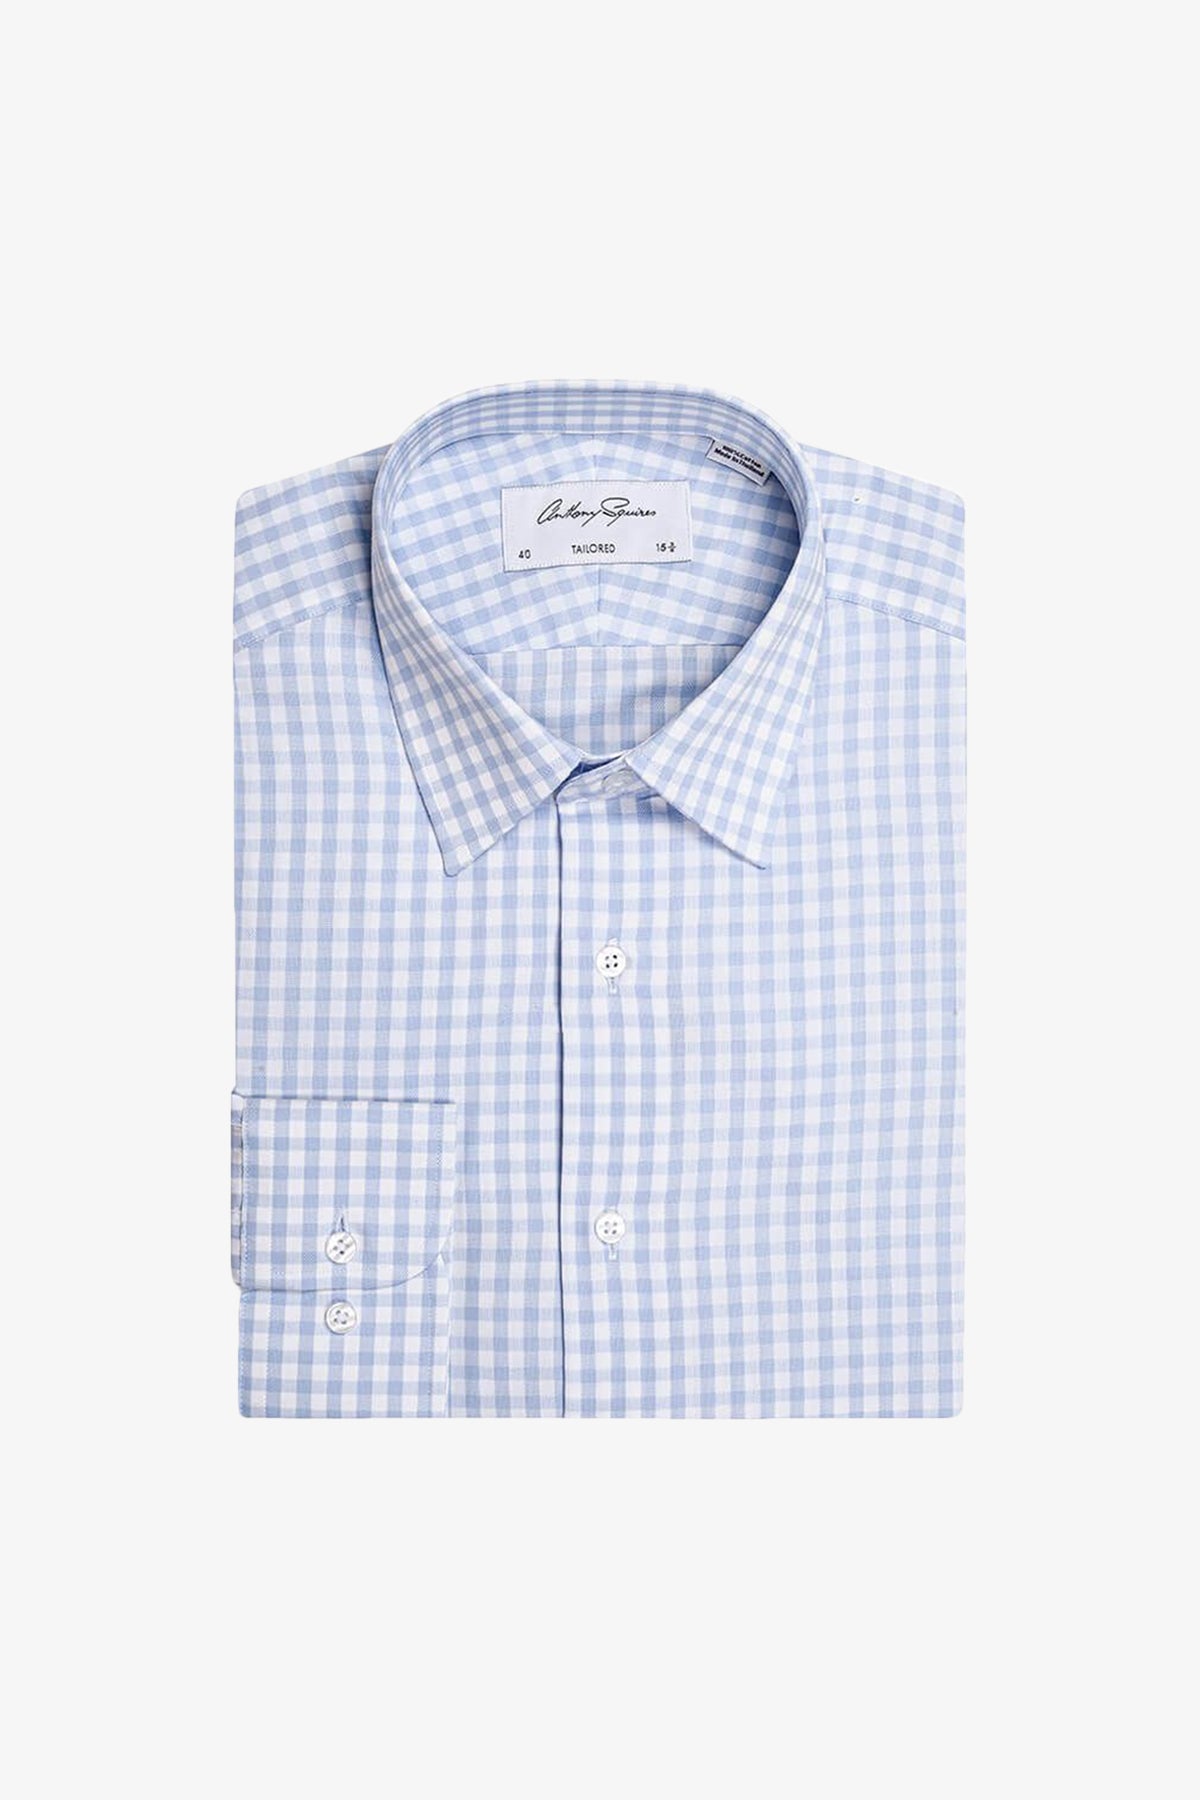 Norris - Light Blue check Shirt